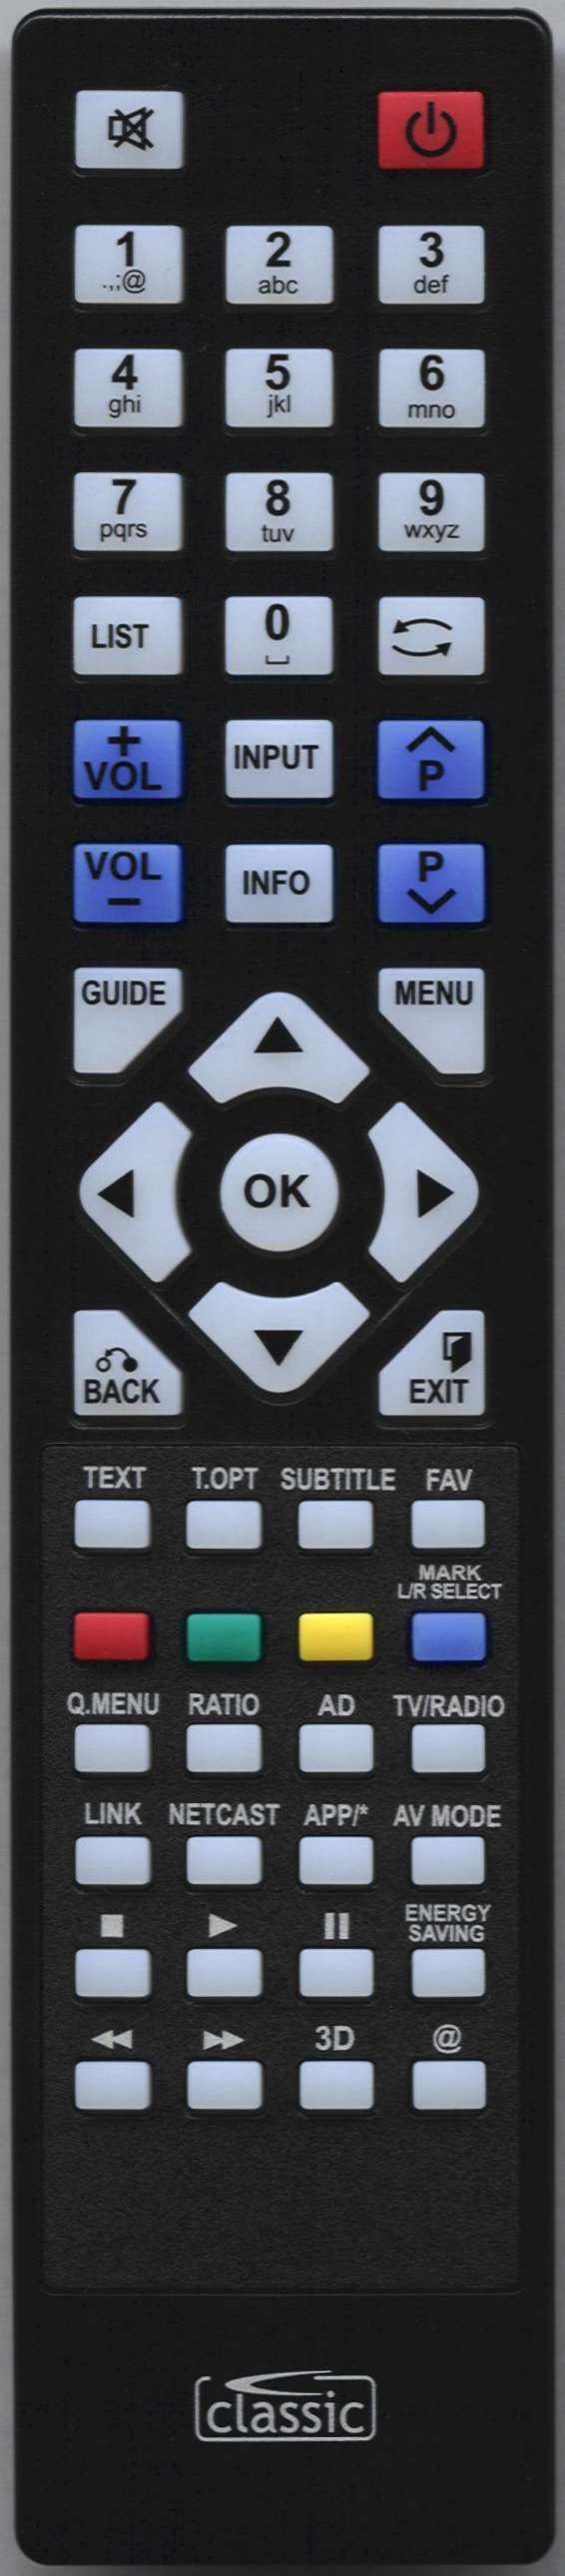 LG 55LD680 Remote Control